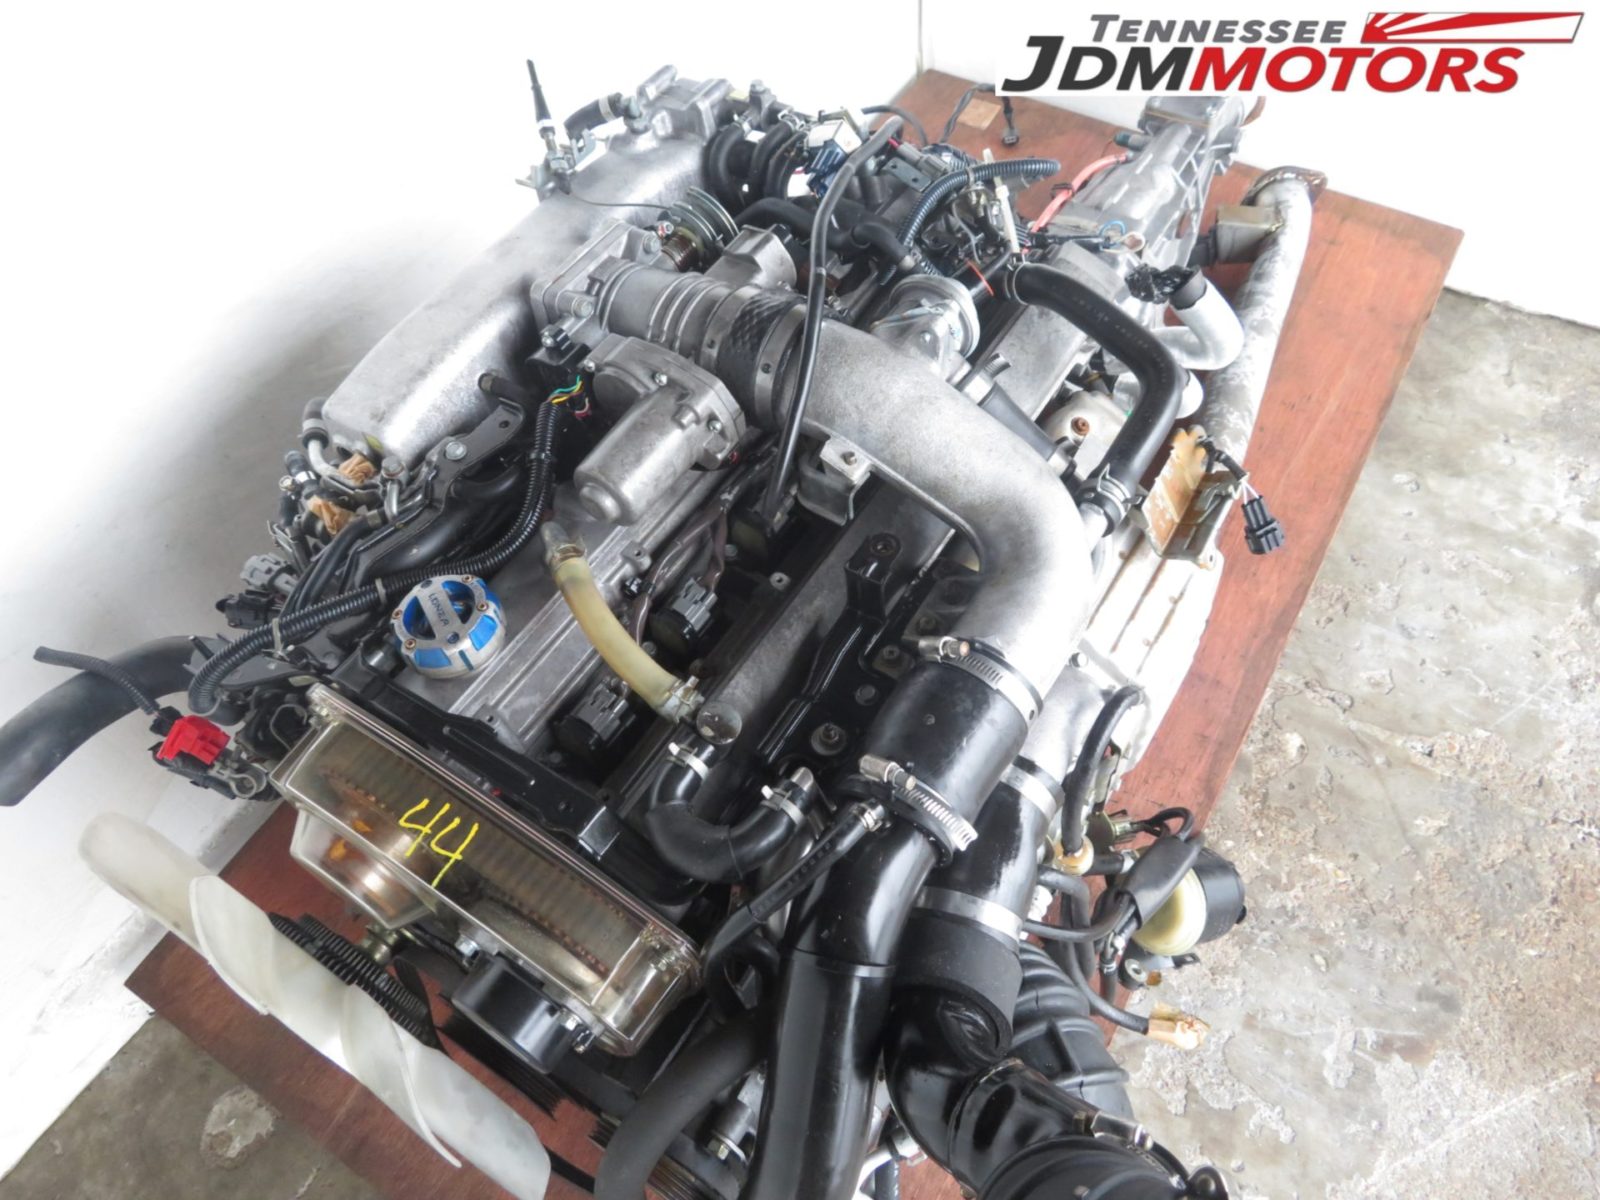 Nissan Skyline 2 5l Neo Turbo Engine With Rbdet 5 Speed Rwd Transmission Jdm Rb25det Tennessee Jdm Motors